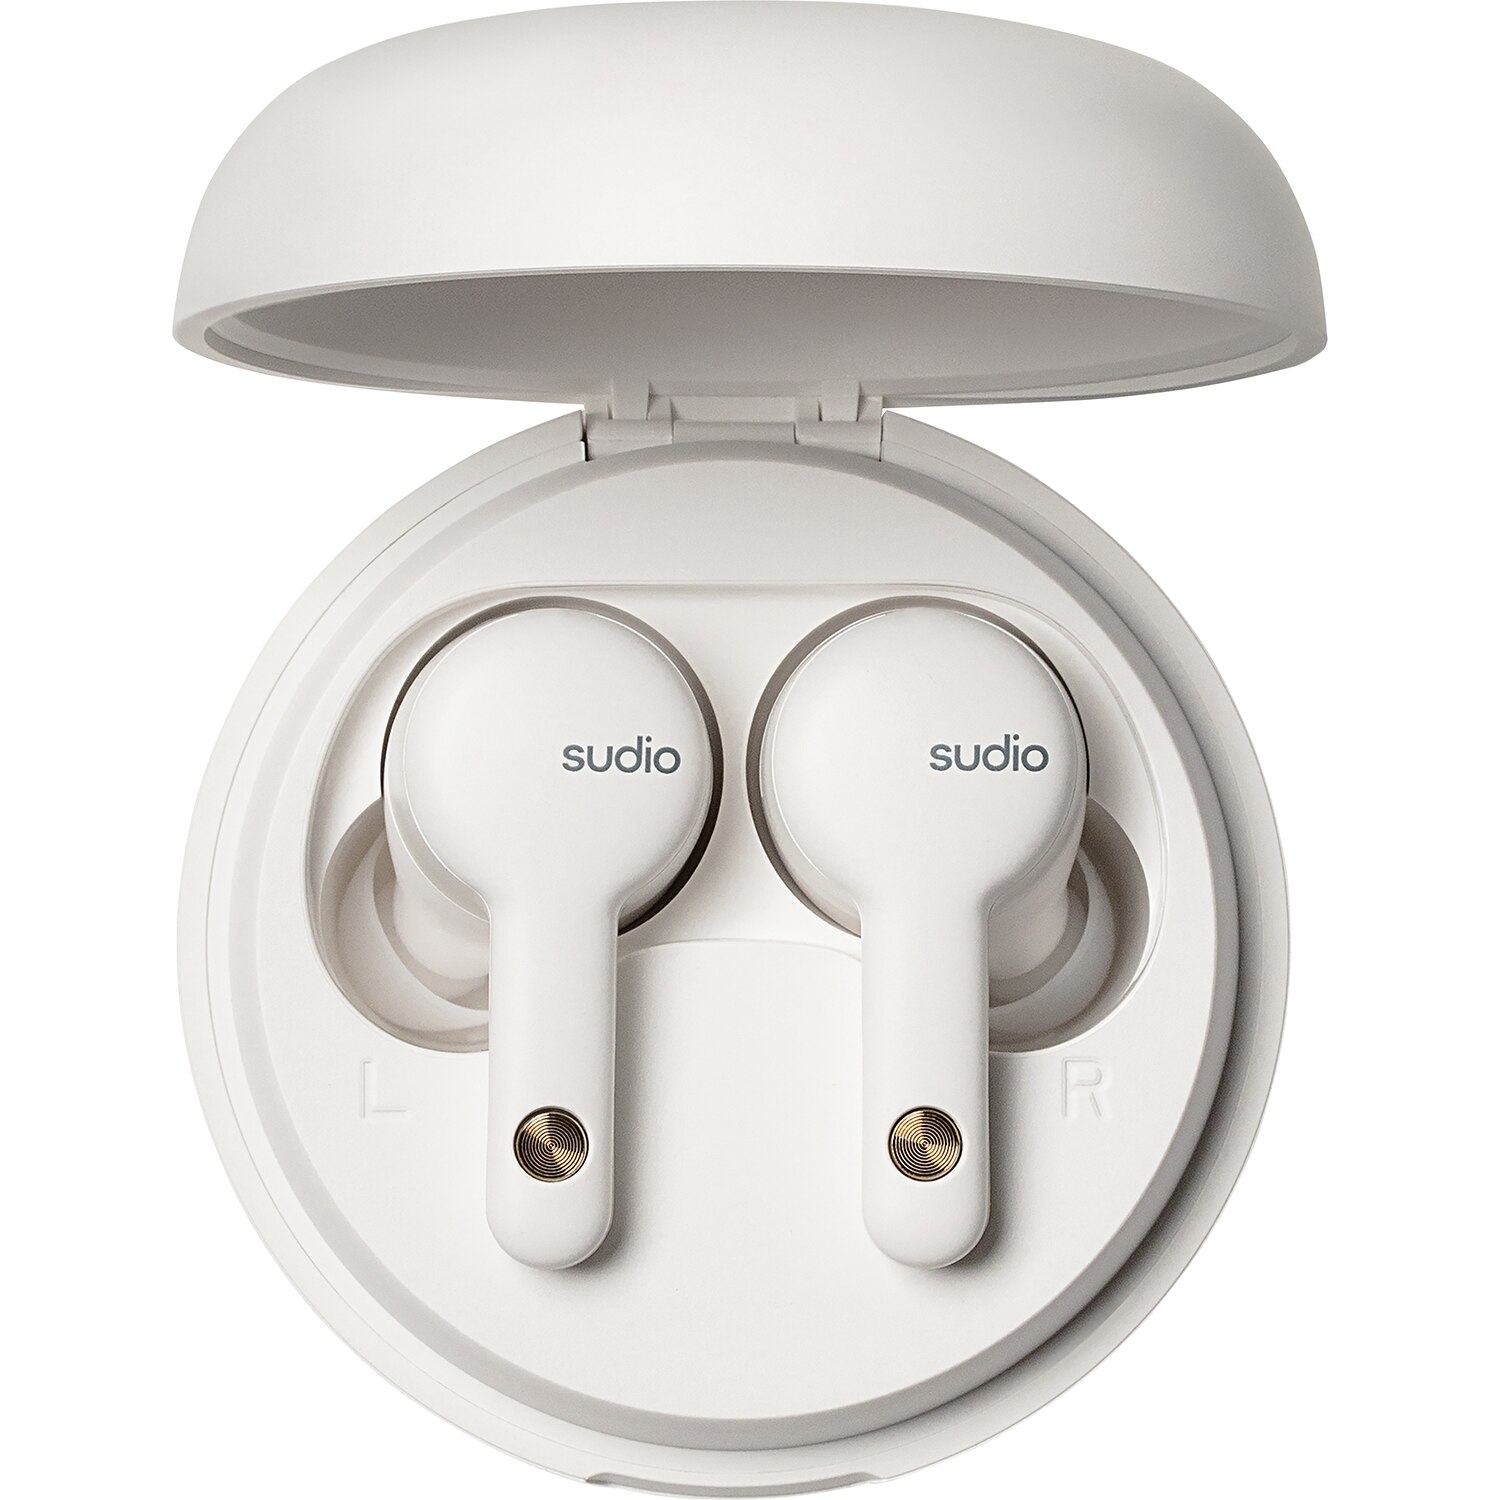 Sudio A2 True Wireless Earbuds, White